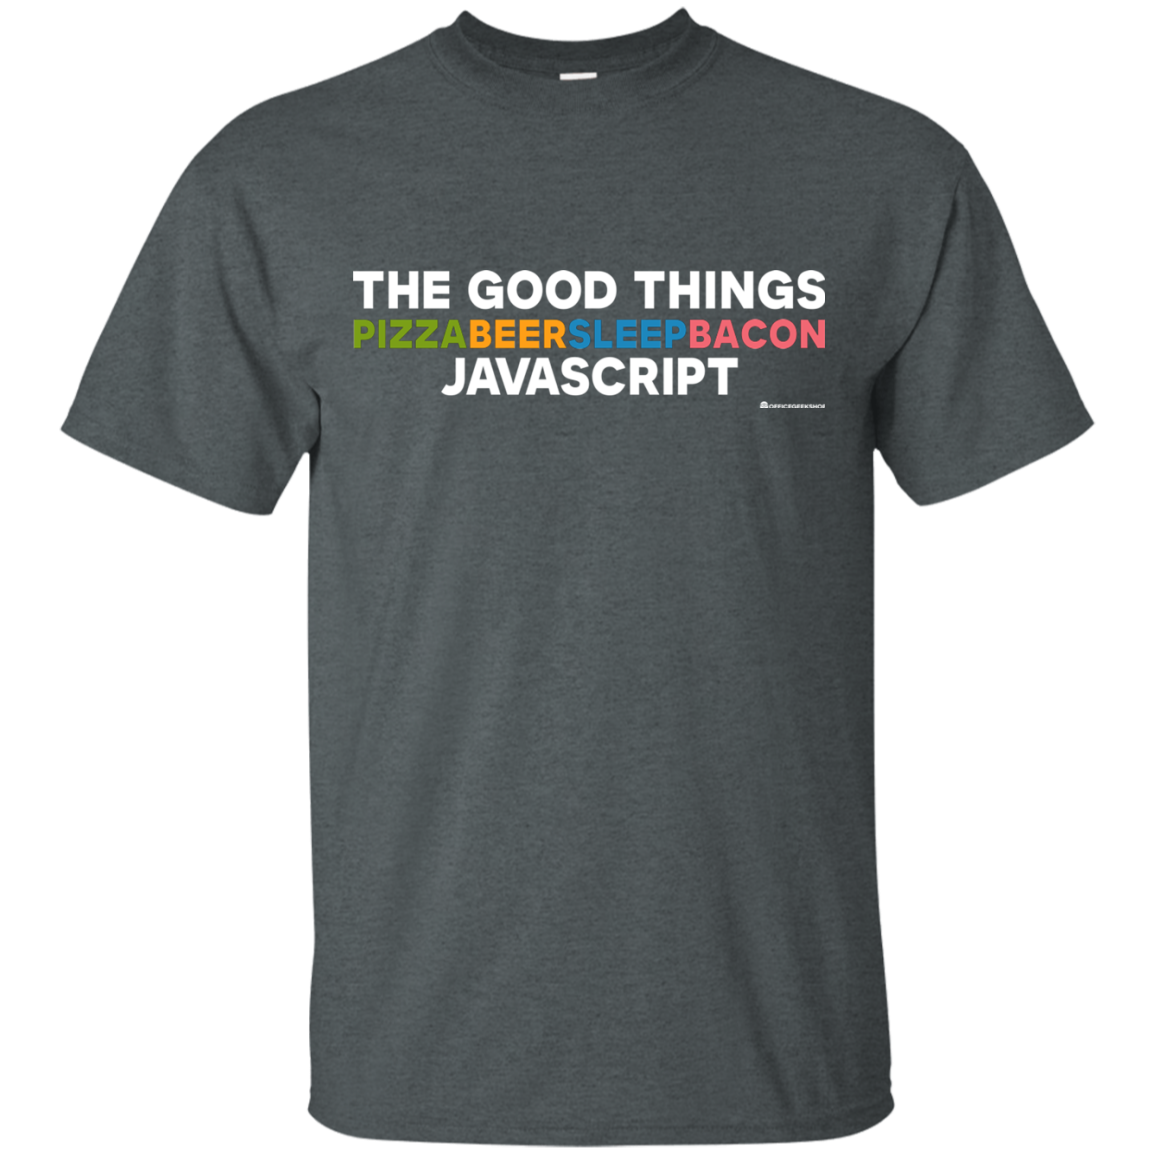 The Good Things T-Shirt